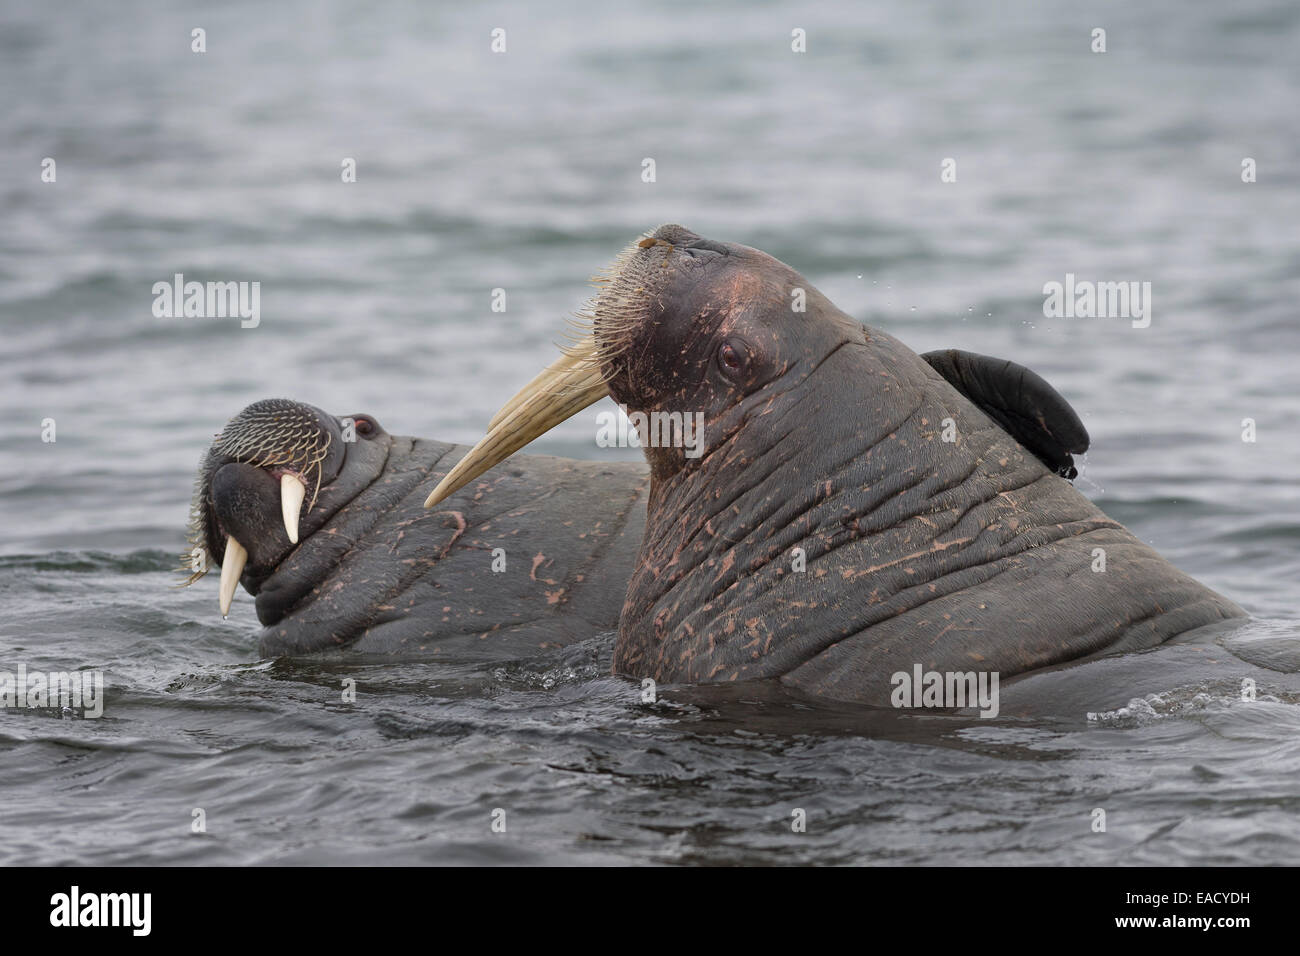 Walruses (Odobenus rosmarus), Phippsøya, Sjuøyane, Svalbard Archipelago, Svalbard and Jan Mayen, Norway Stock Photo